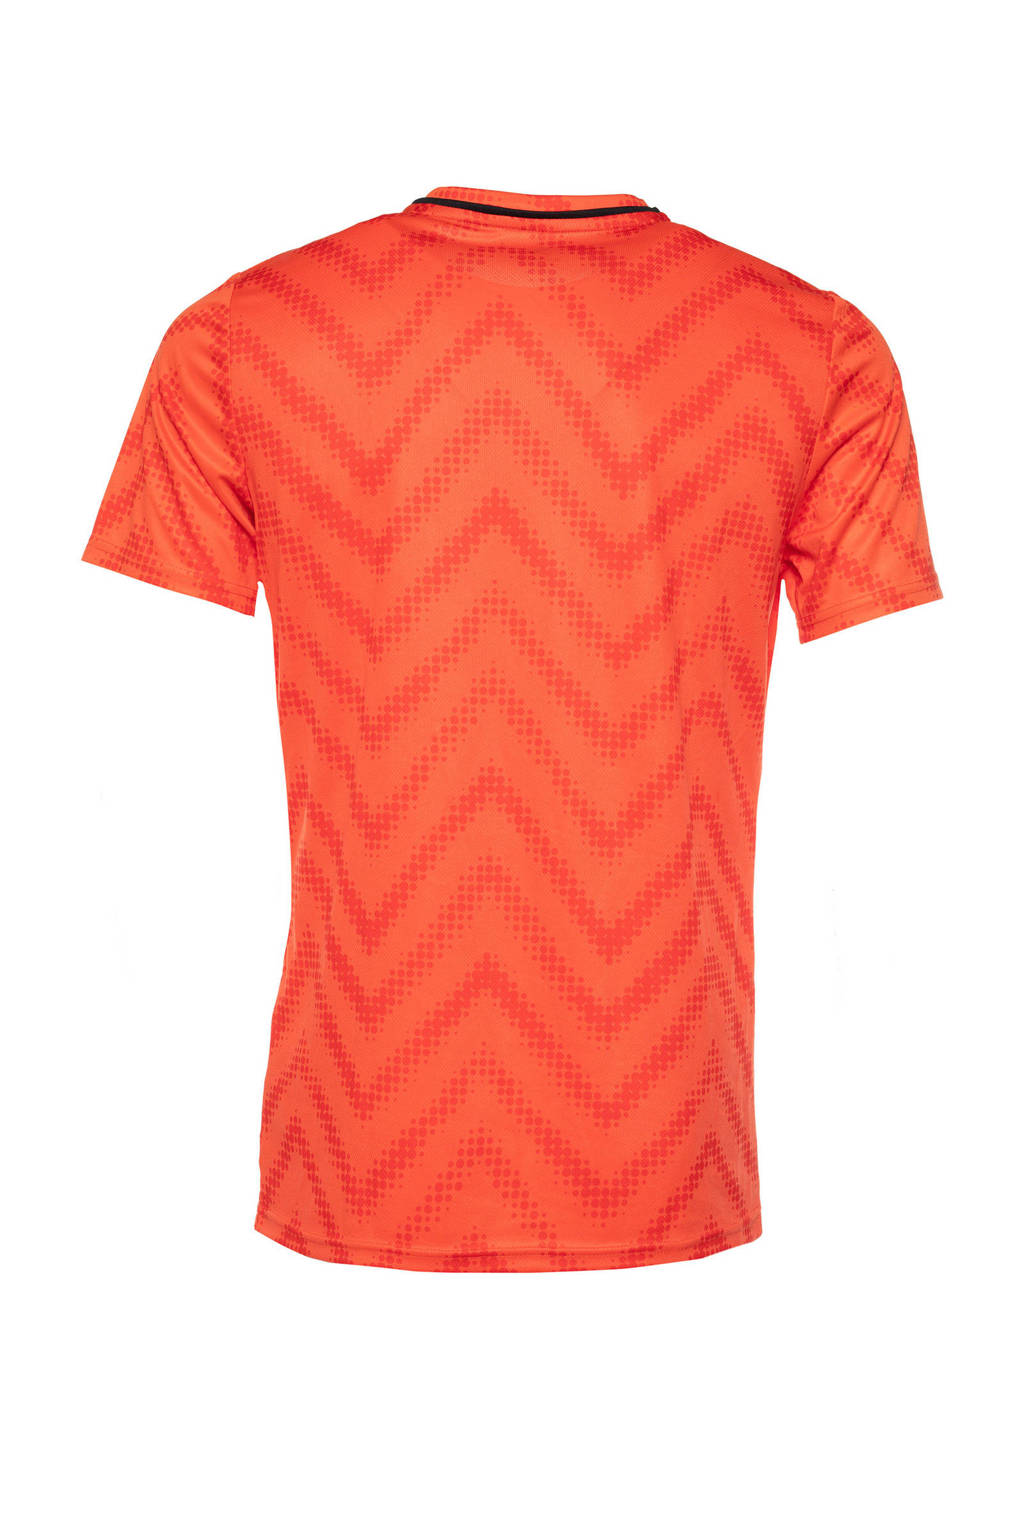 Scapino voetbal T-shirt oranje |